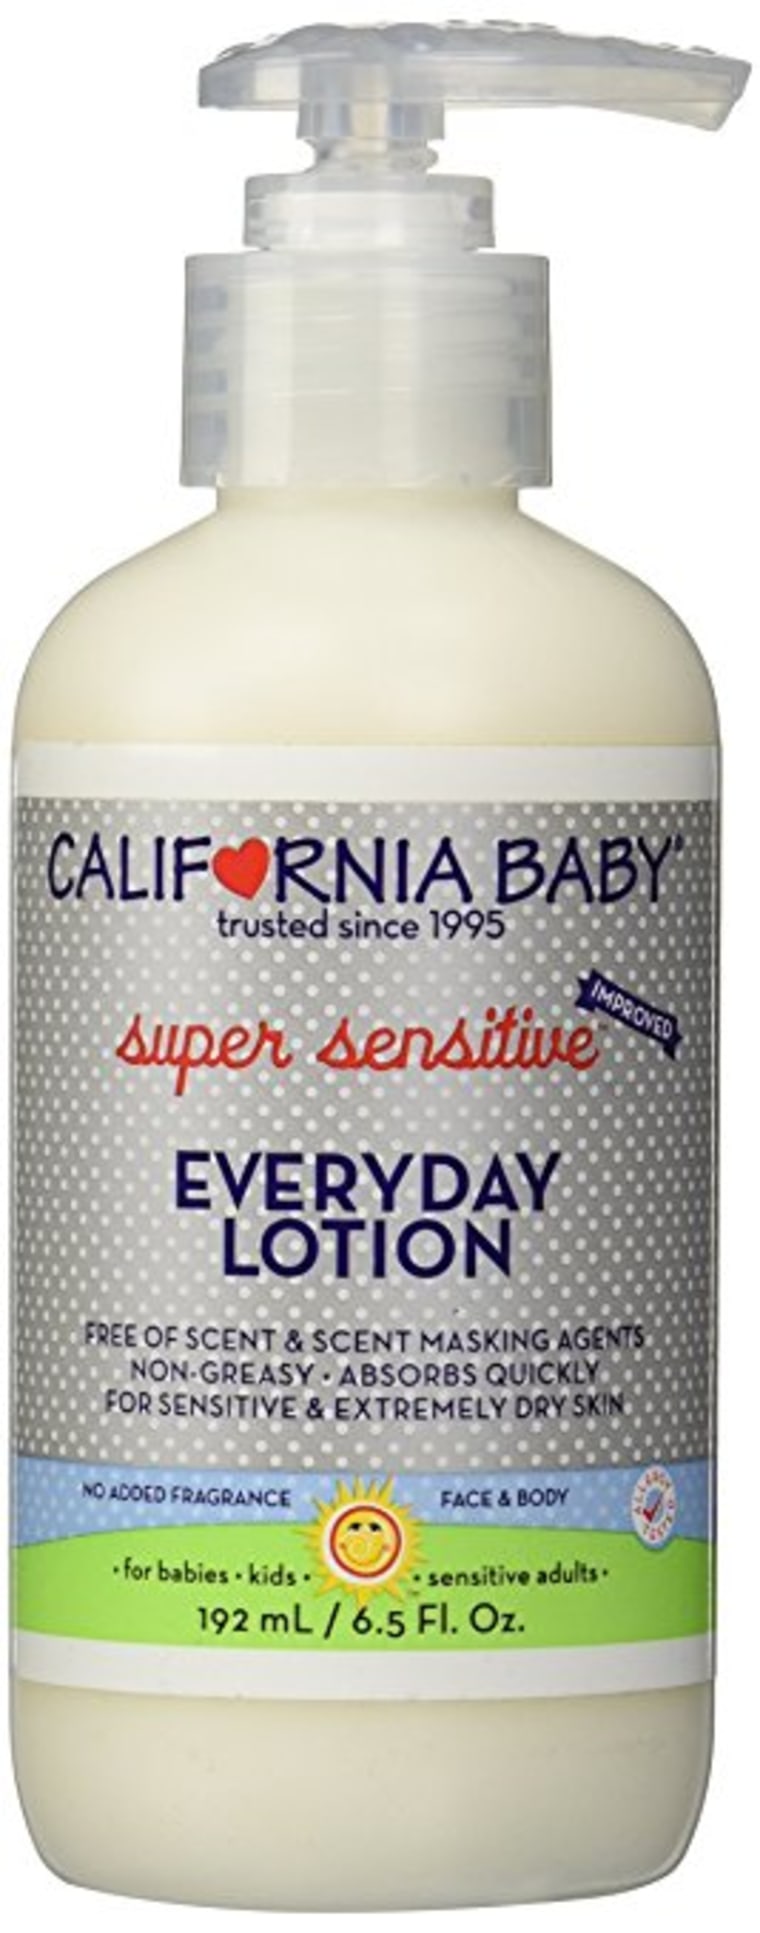 California Baby Lotion